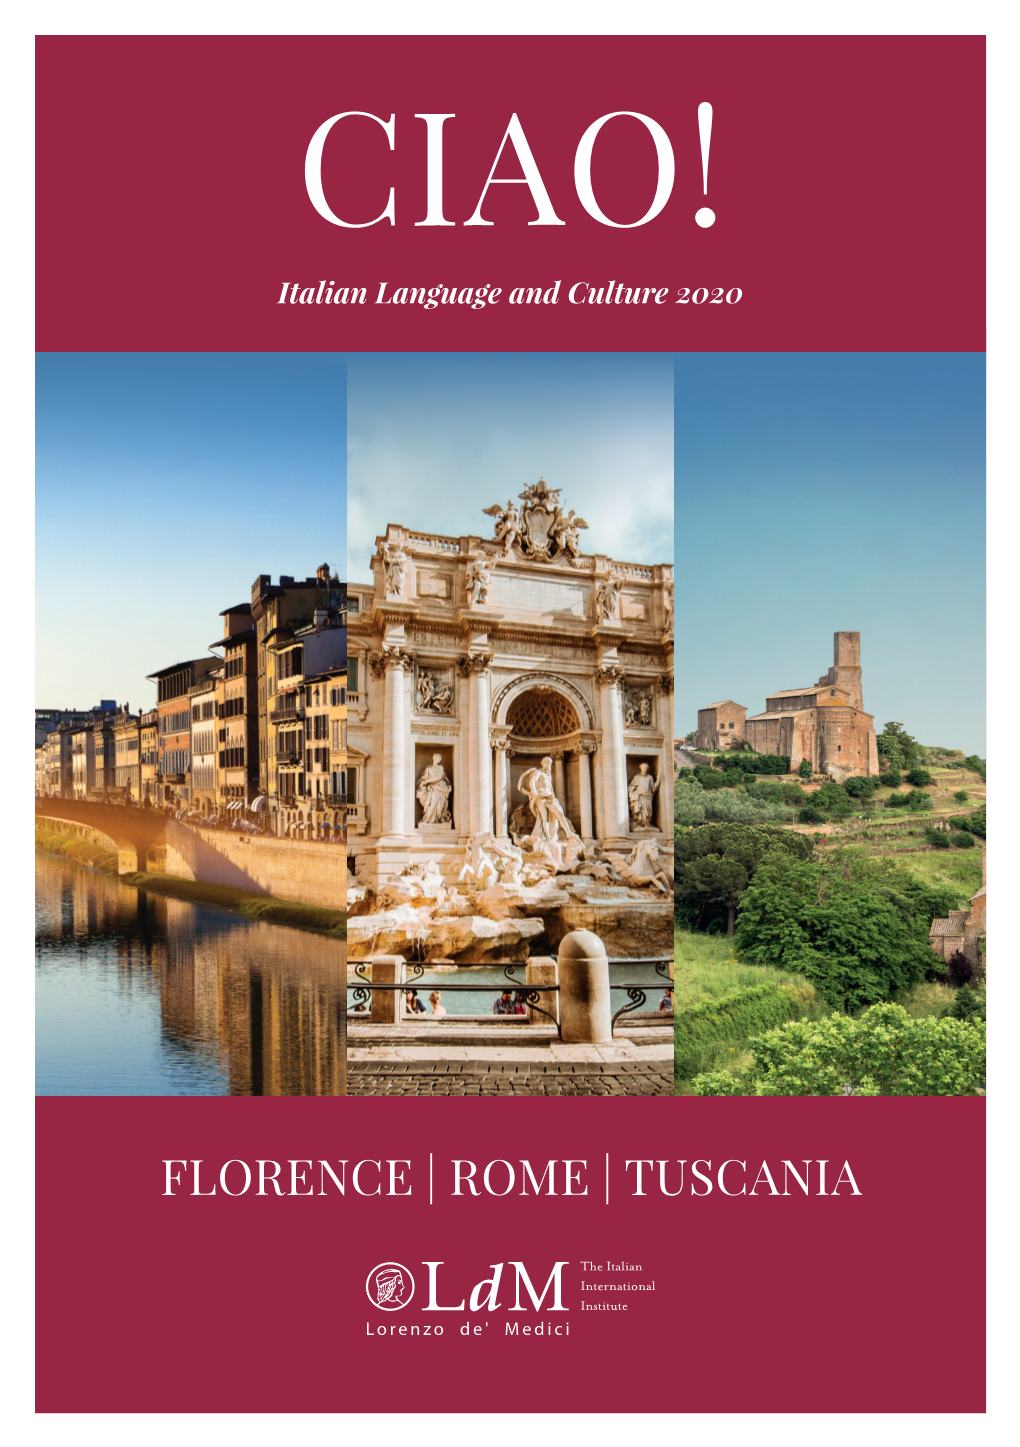 Florence | Rome | Tuscania